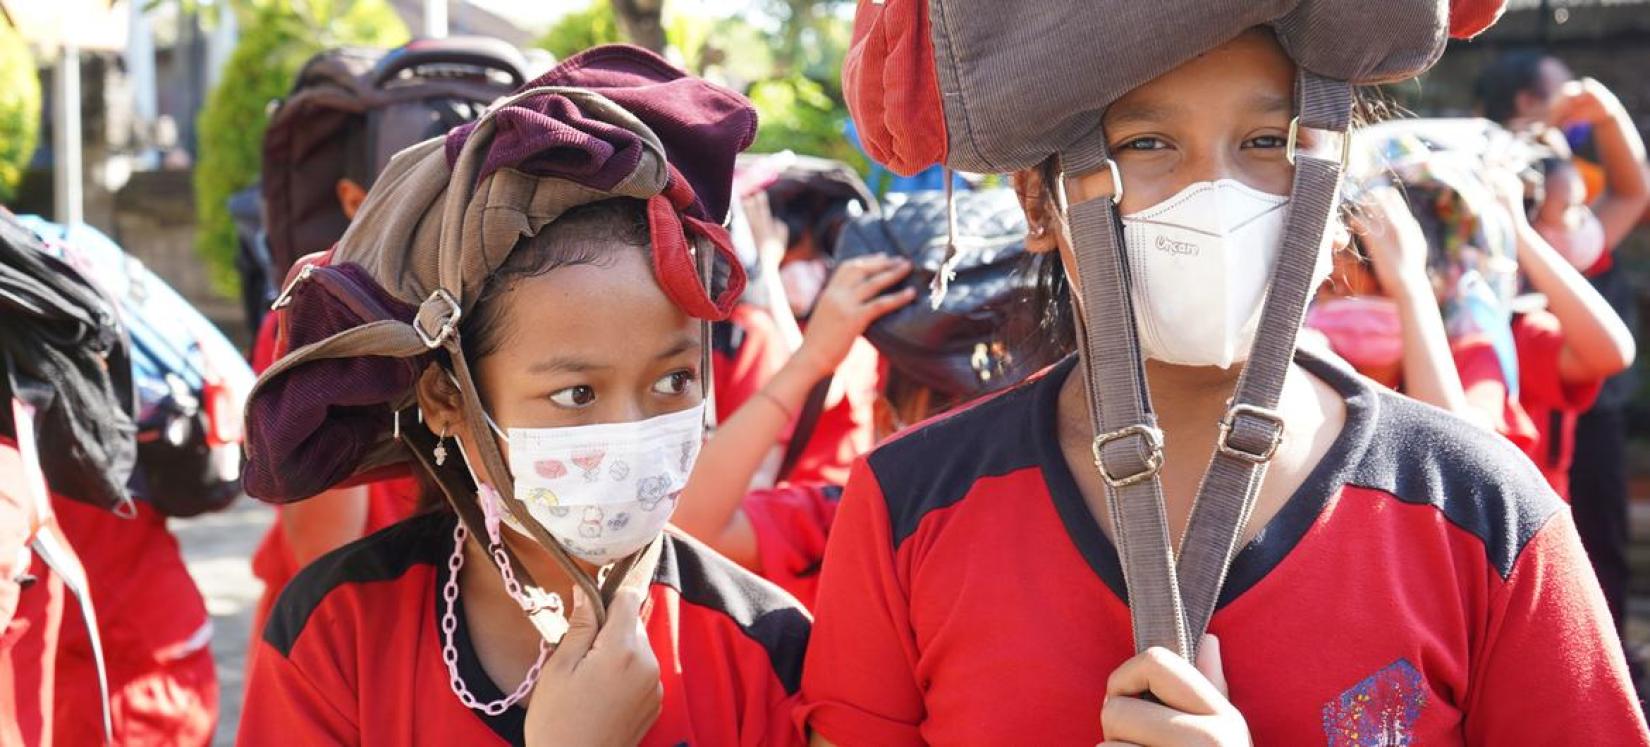 School children in Bali practice tsunami preparedness